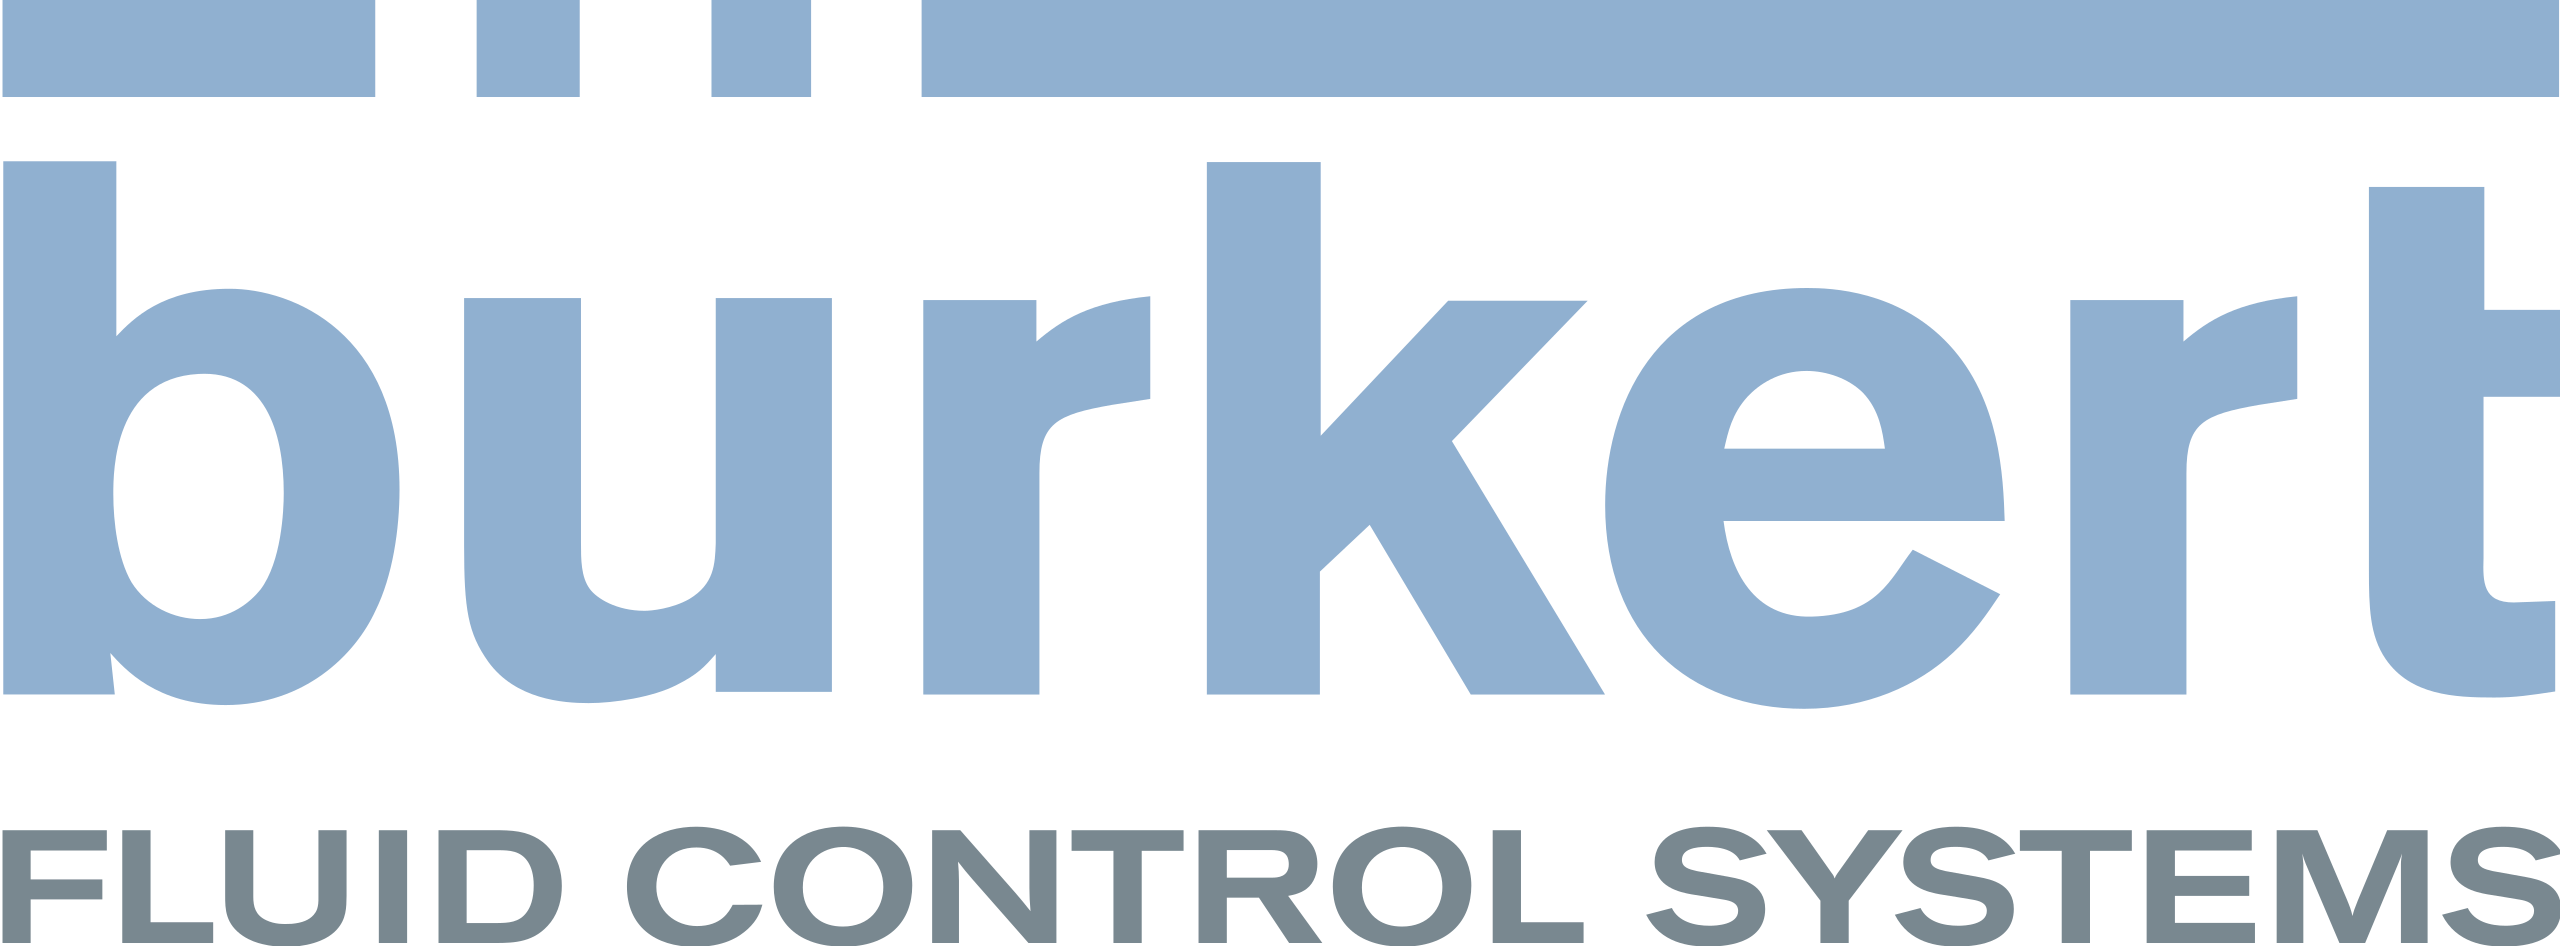 Bürkert Werke GmbH & Co. KG